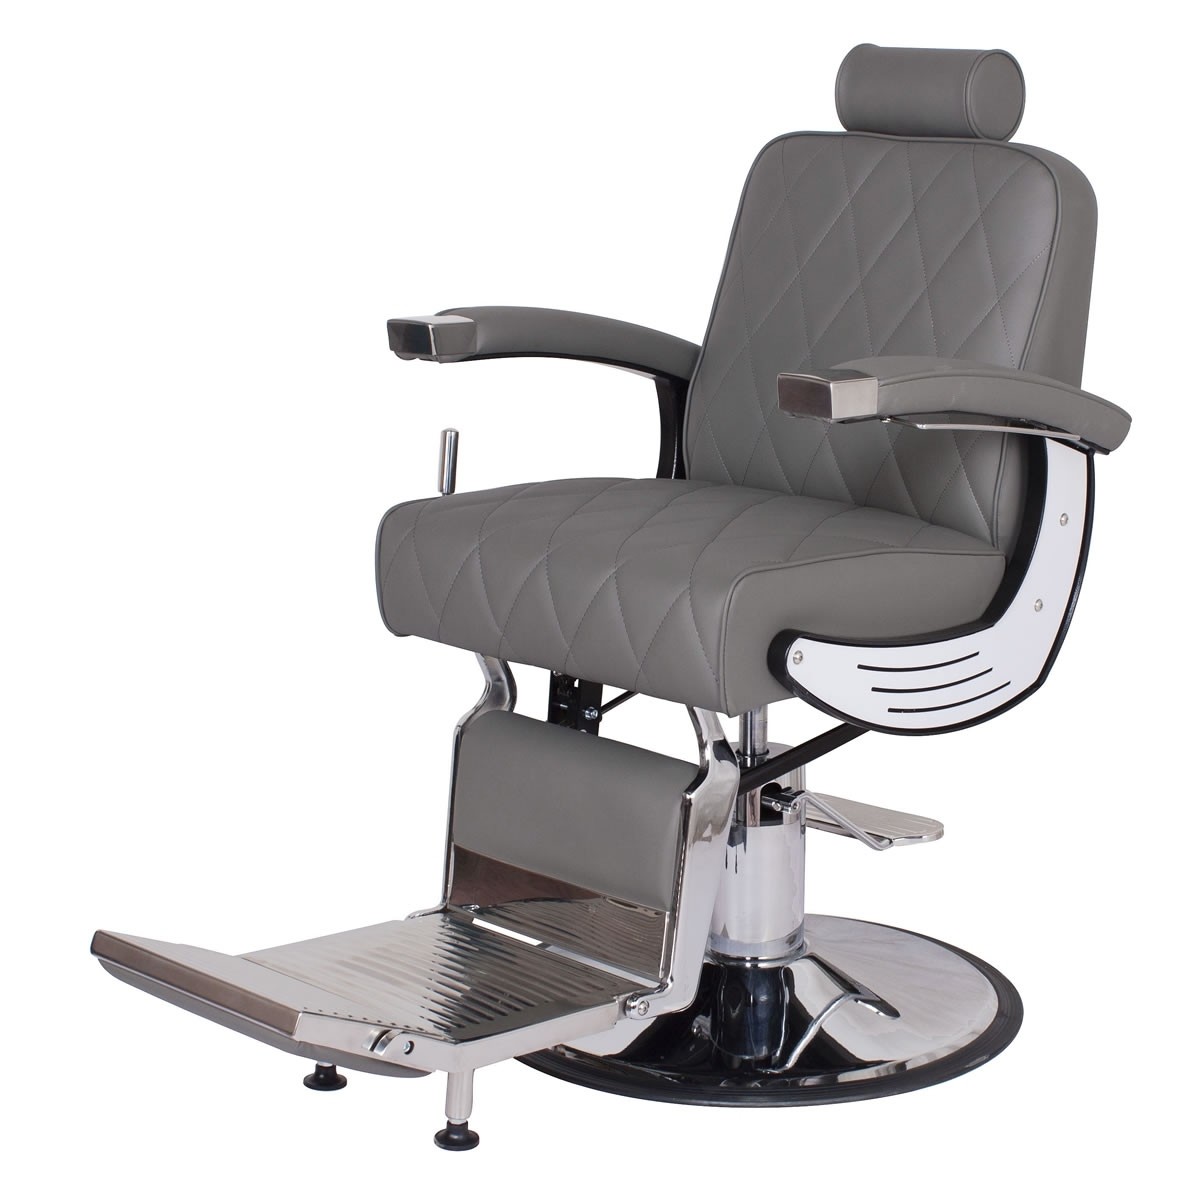 "BARON" Heavy Duty Barber Chair in Grey